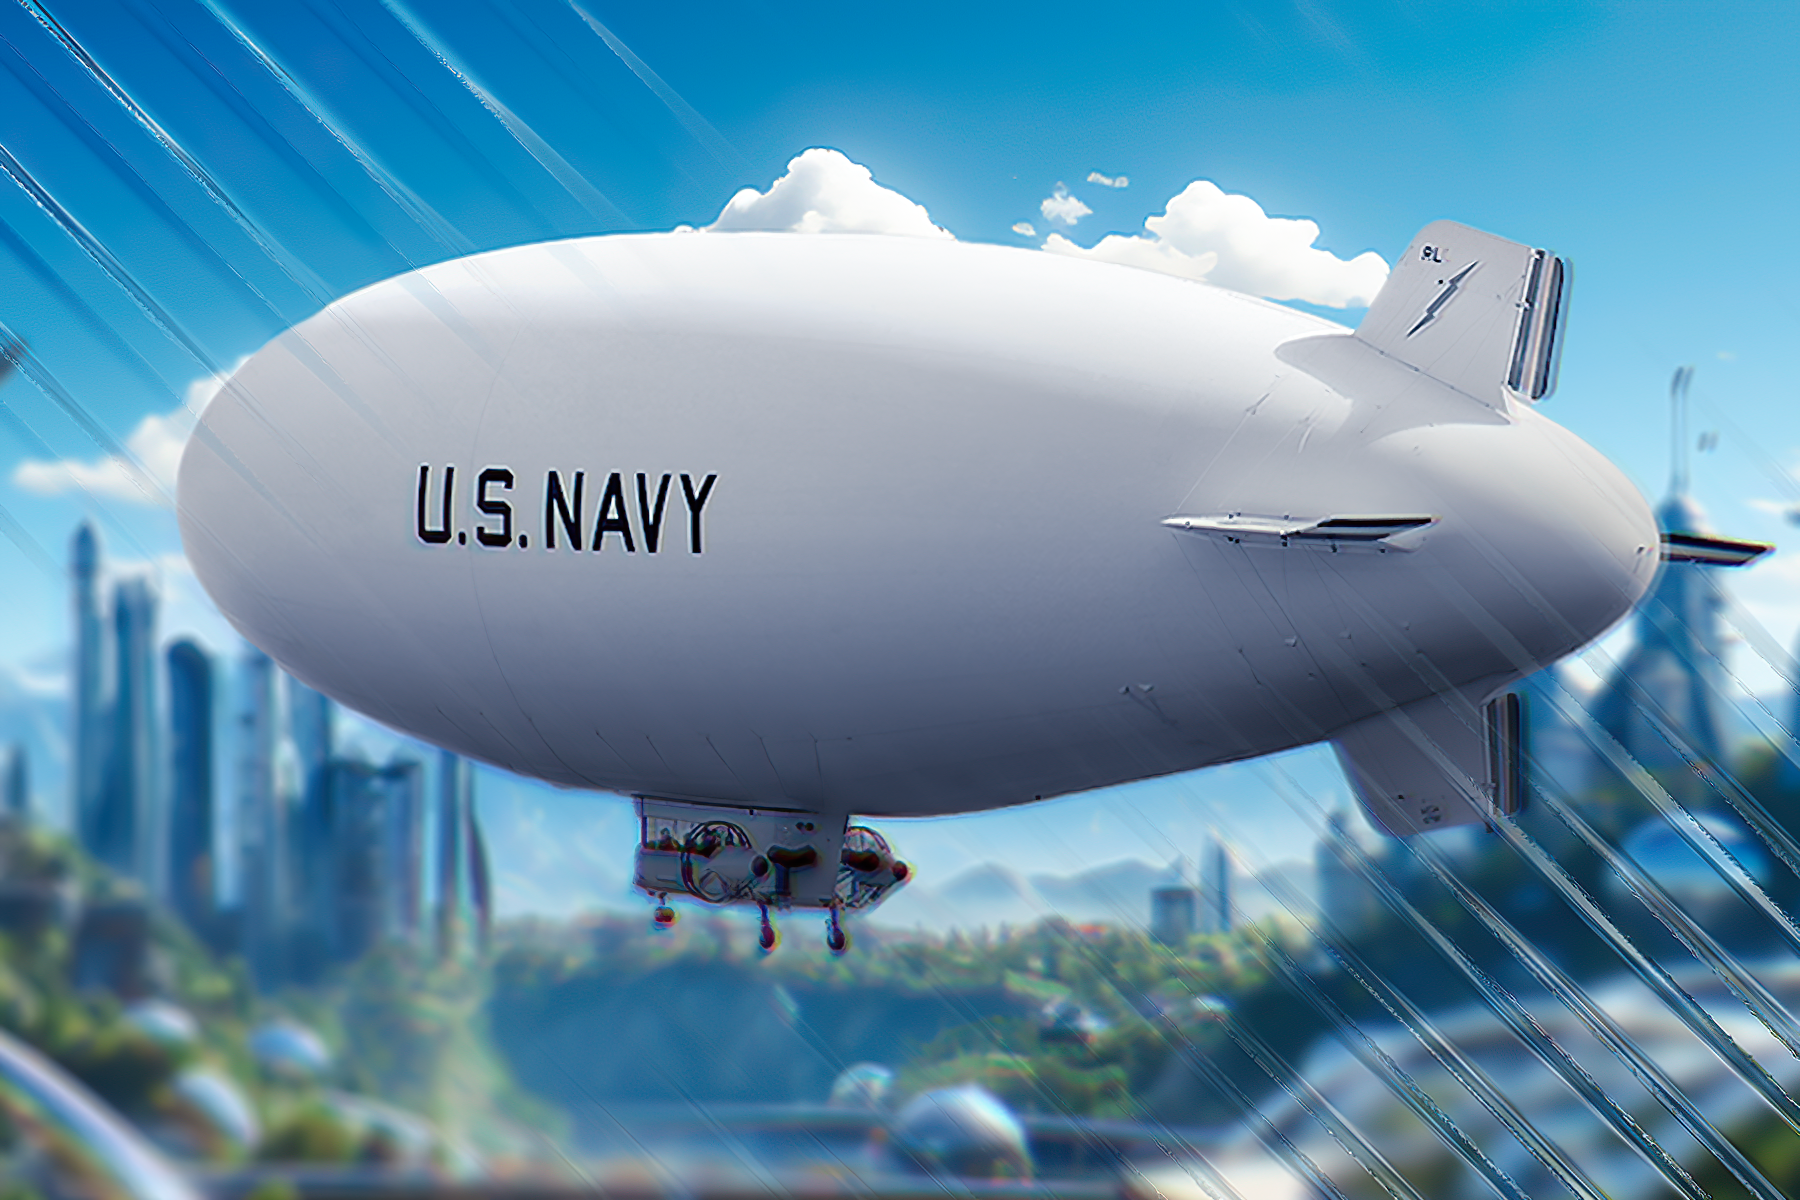 A Futuristic US Navy airship flying near a city.